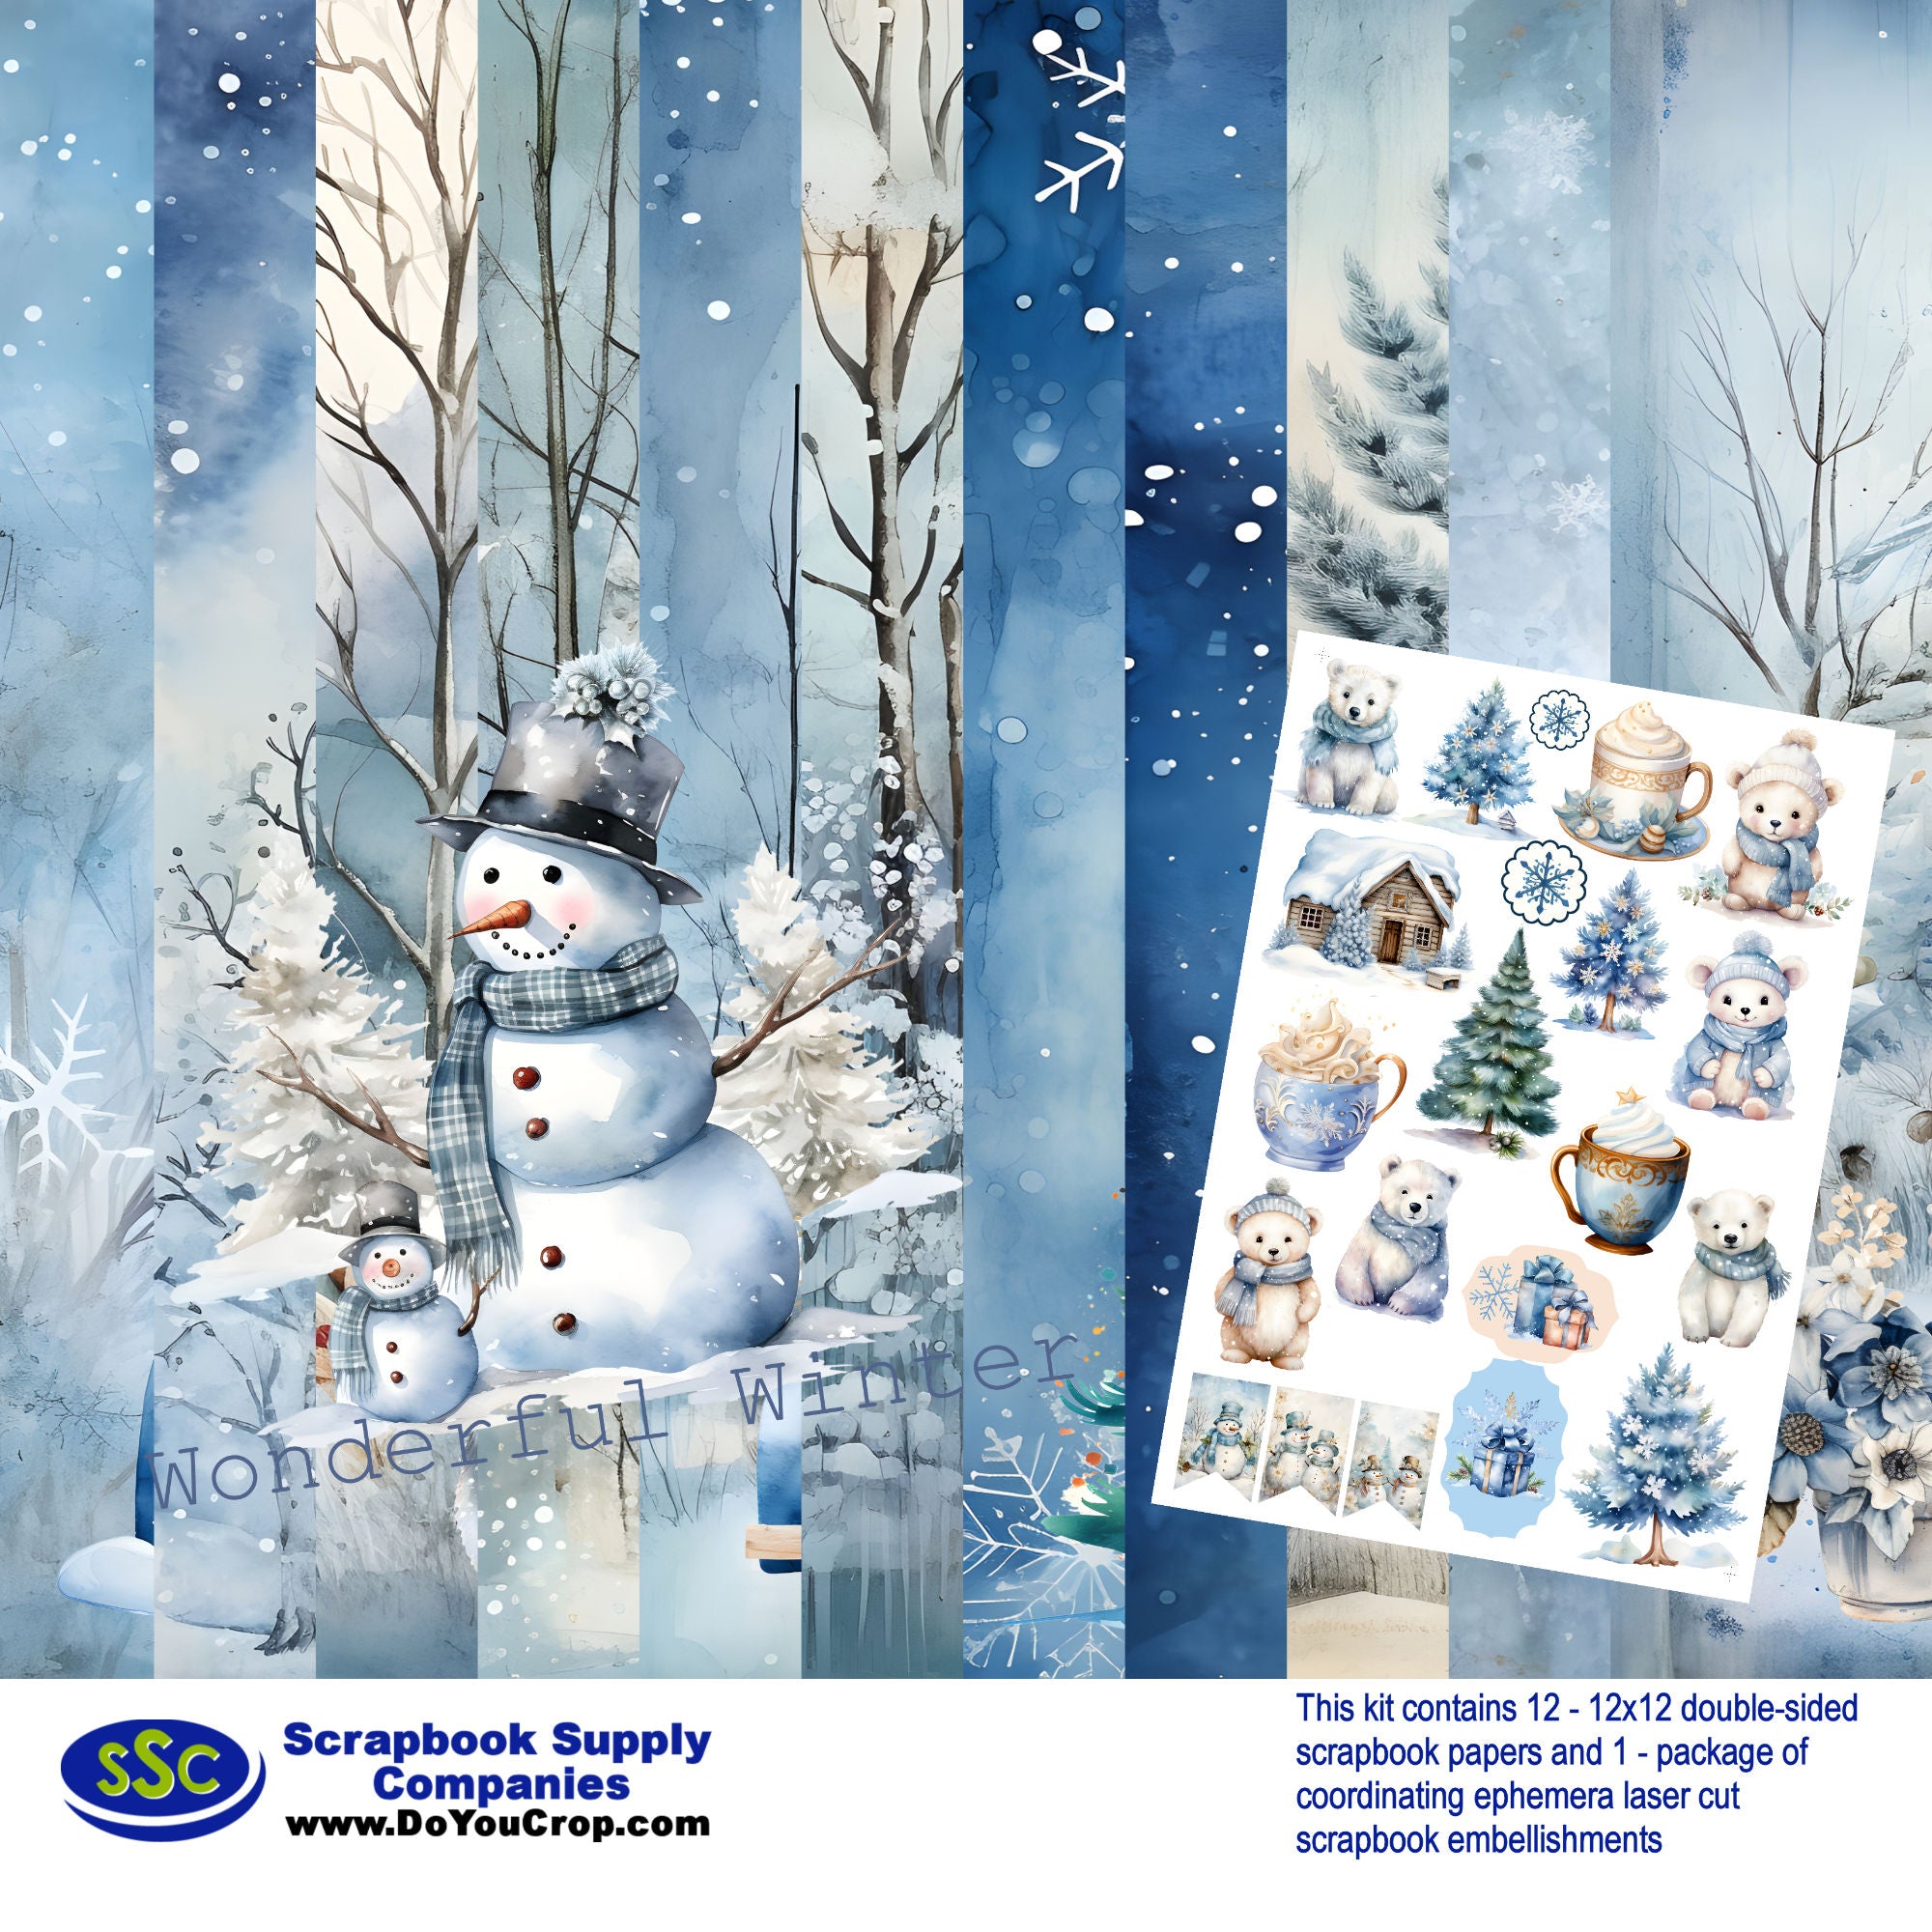 Wonderful Winter 12 x 12 Scrapbook Paper & Embellishment Kit by SSC Designs